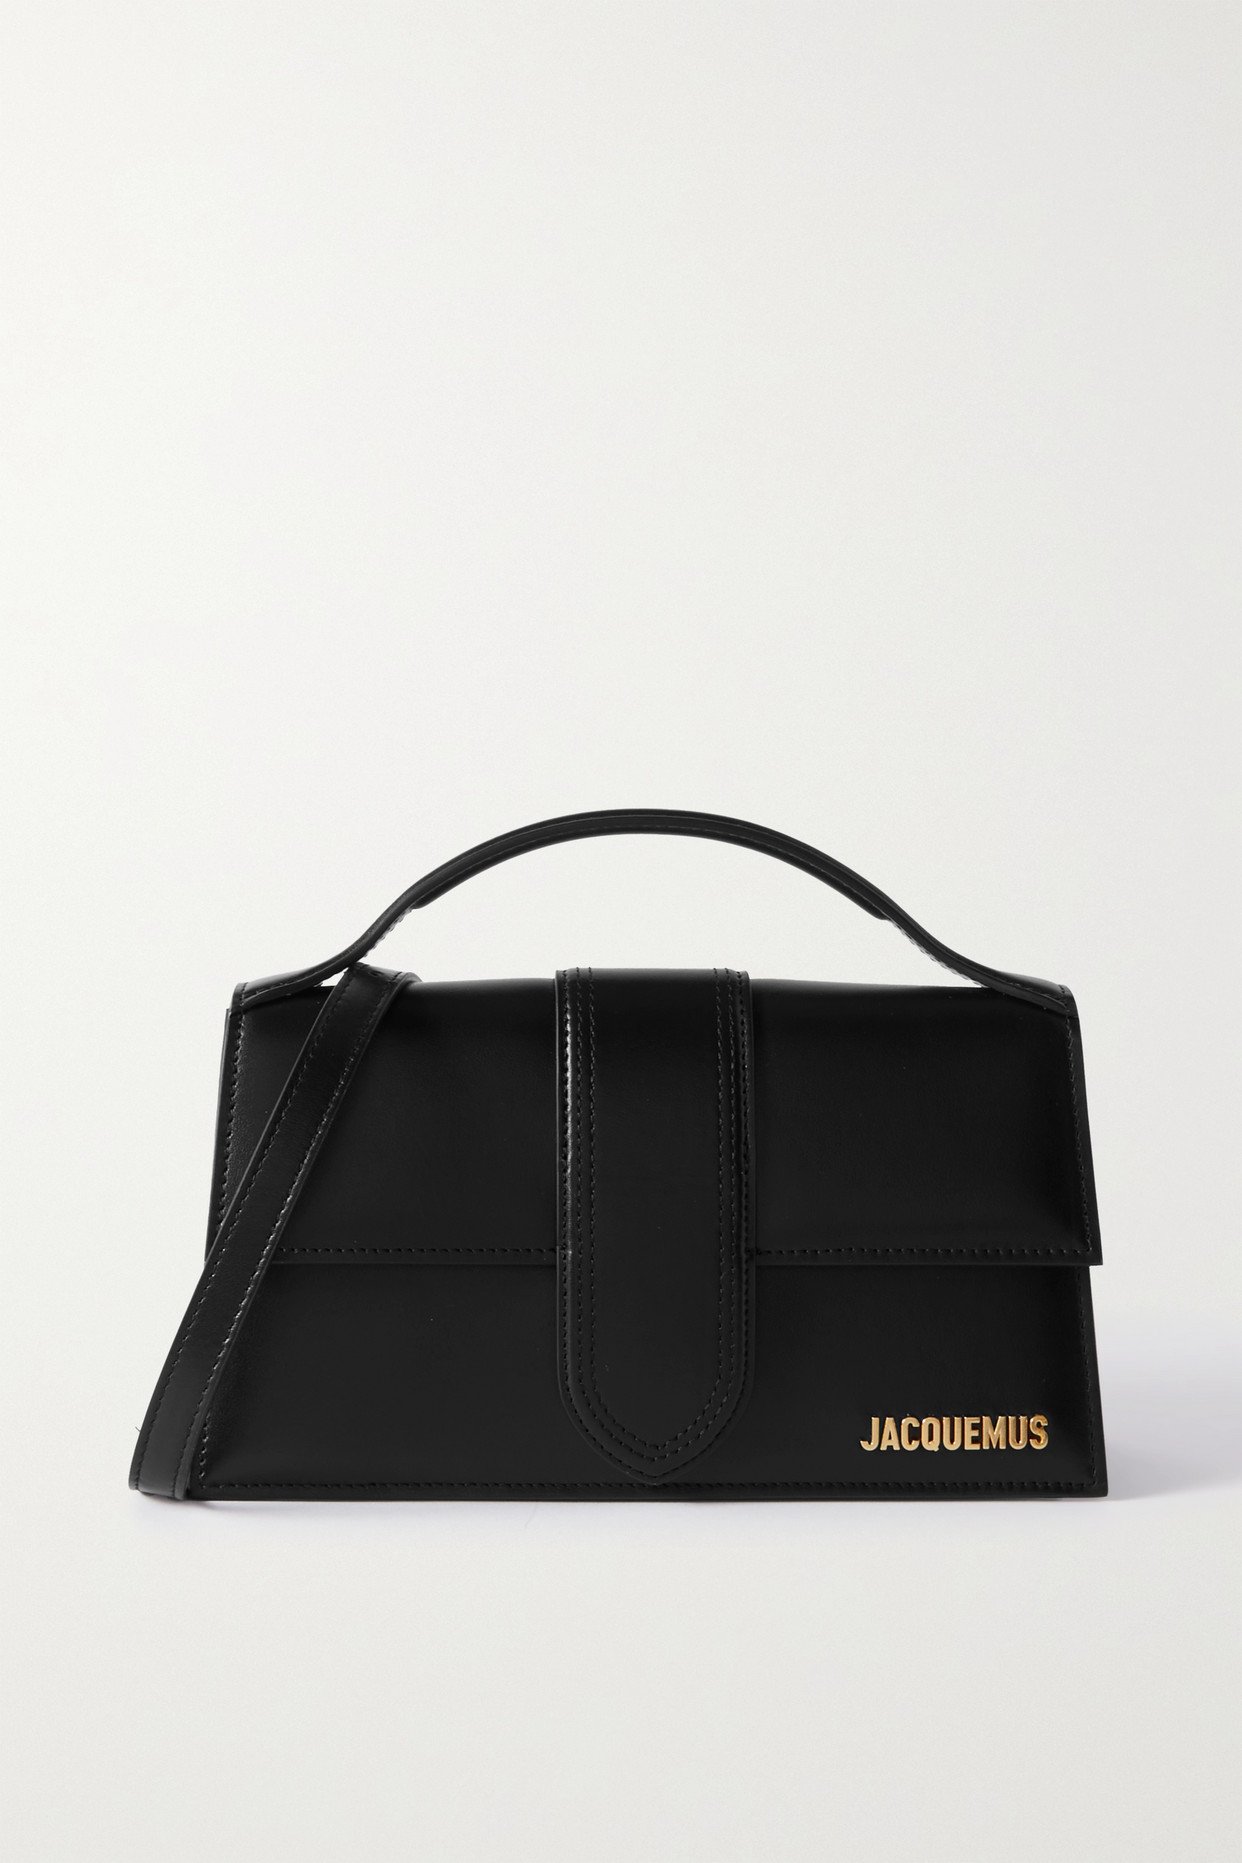 Jacquemus Le Bambino Leather Mini Bag - Farfetch